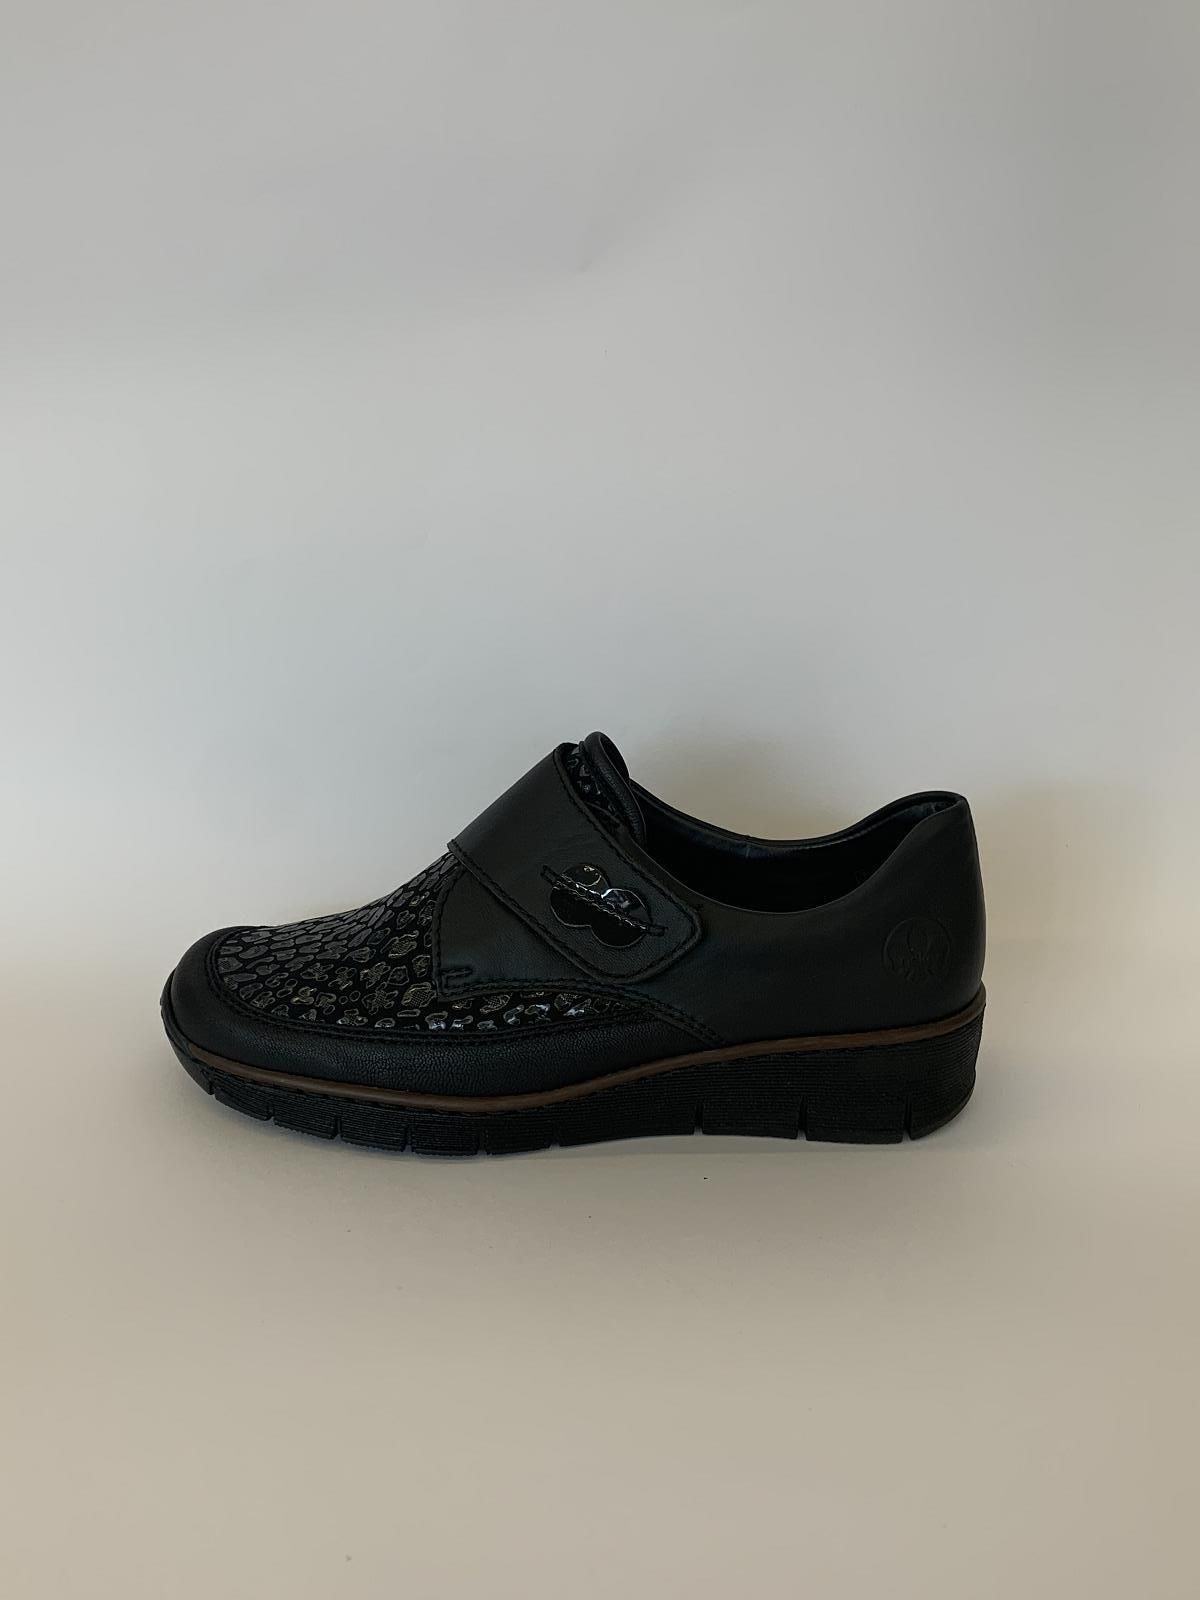 Rieker Velcro's Zwart dames (Velcro Stretch Zw. - 537C0-00) - Schoenen Luca